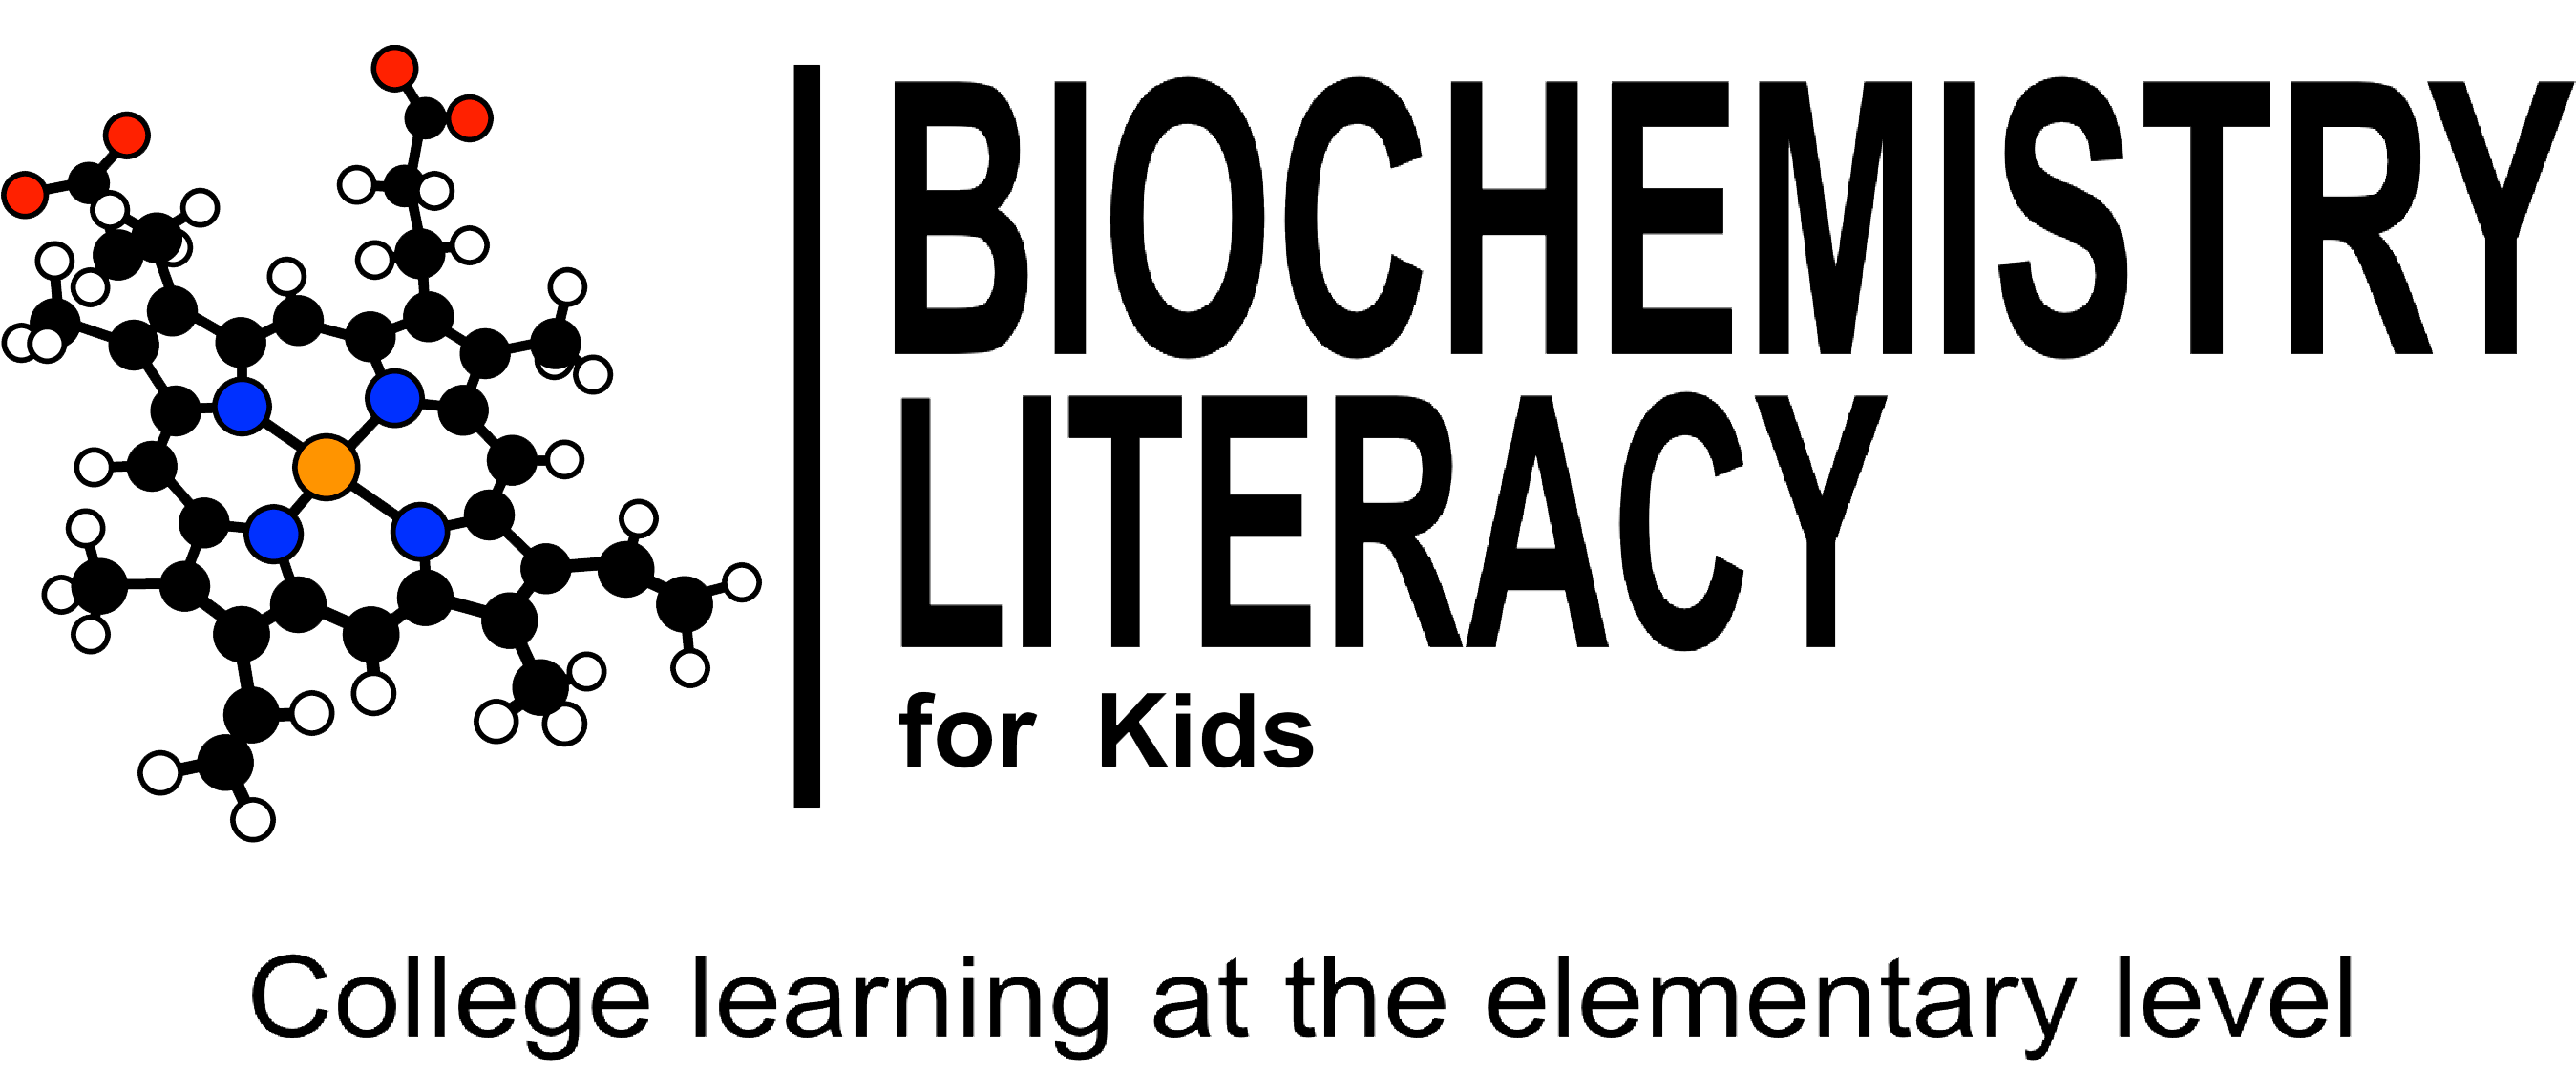 Biochemistry Logo - STEM Curriculum for Teachers and Parents | Biochemistry Literacy for ...